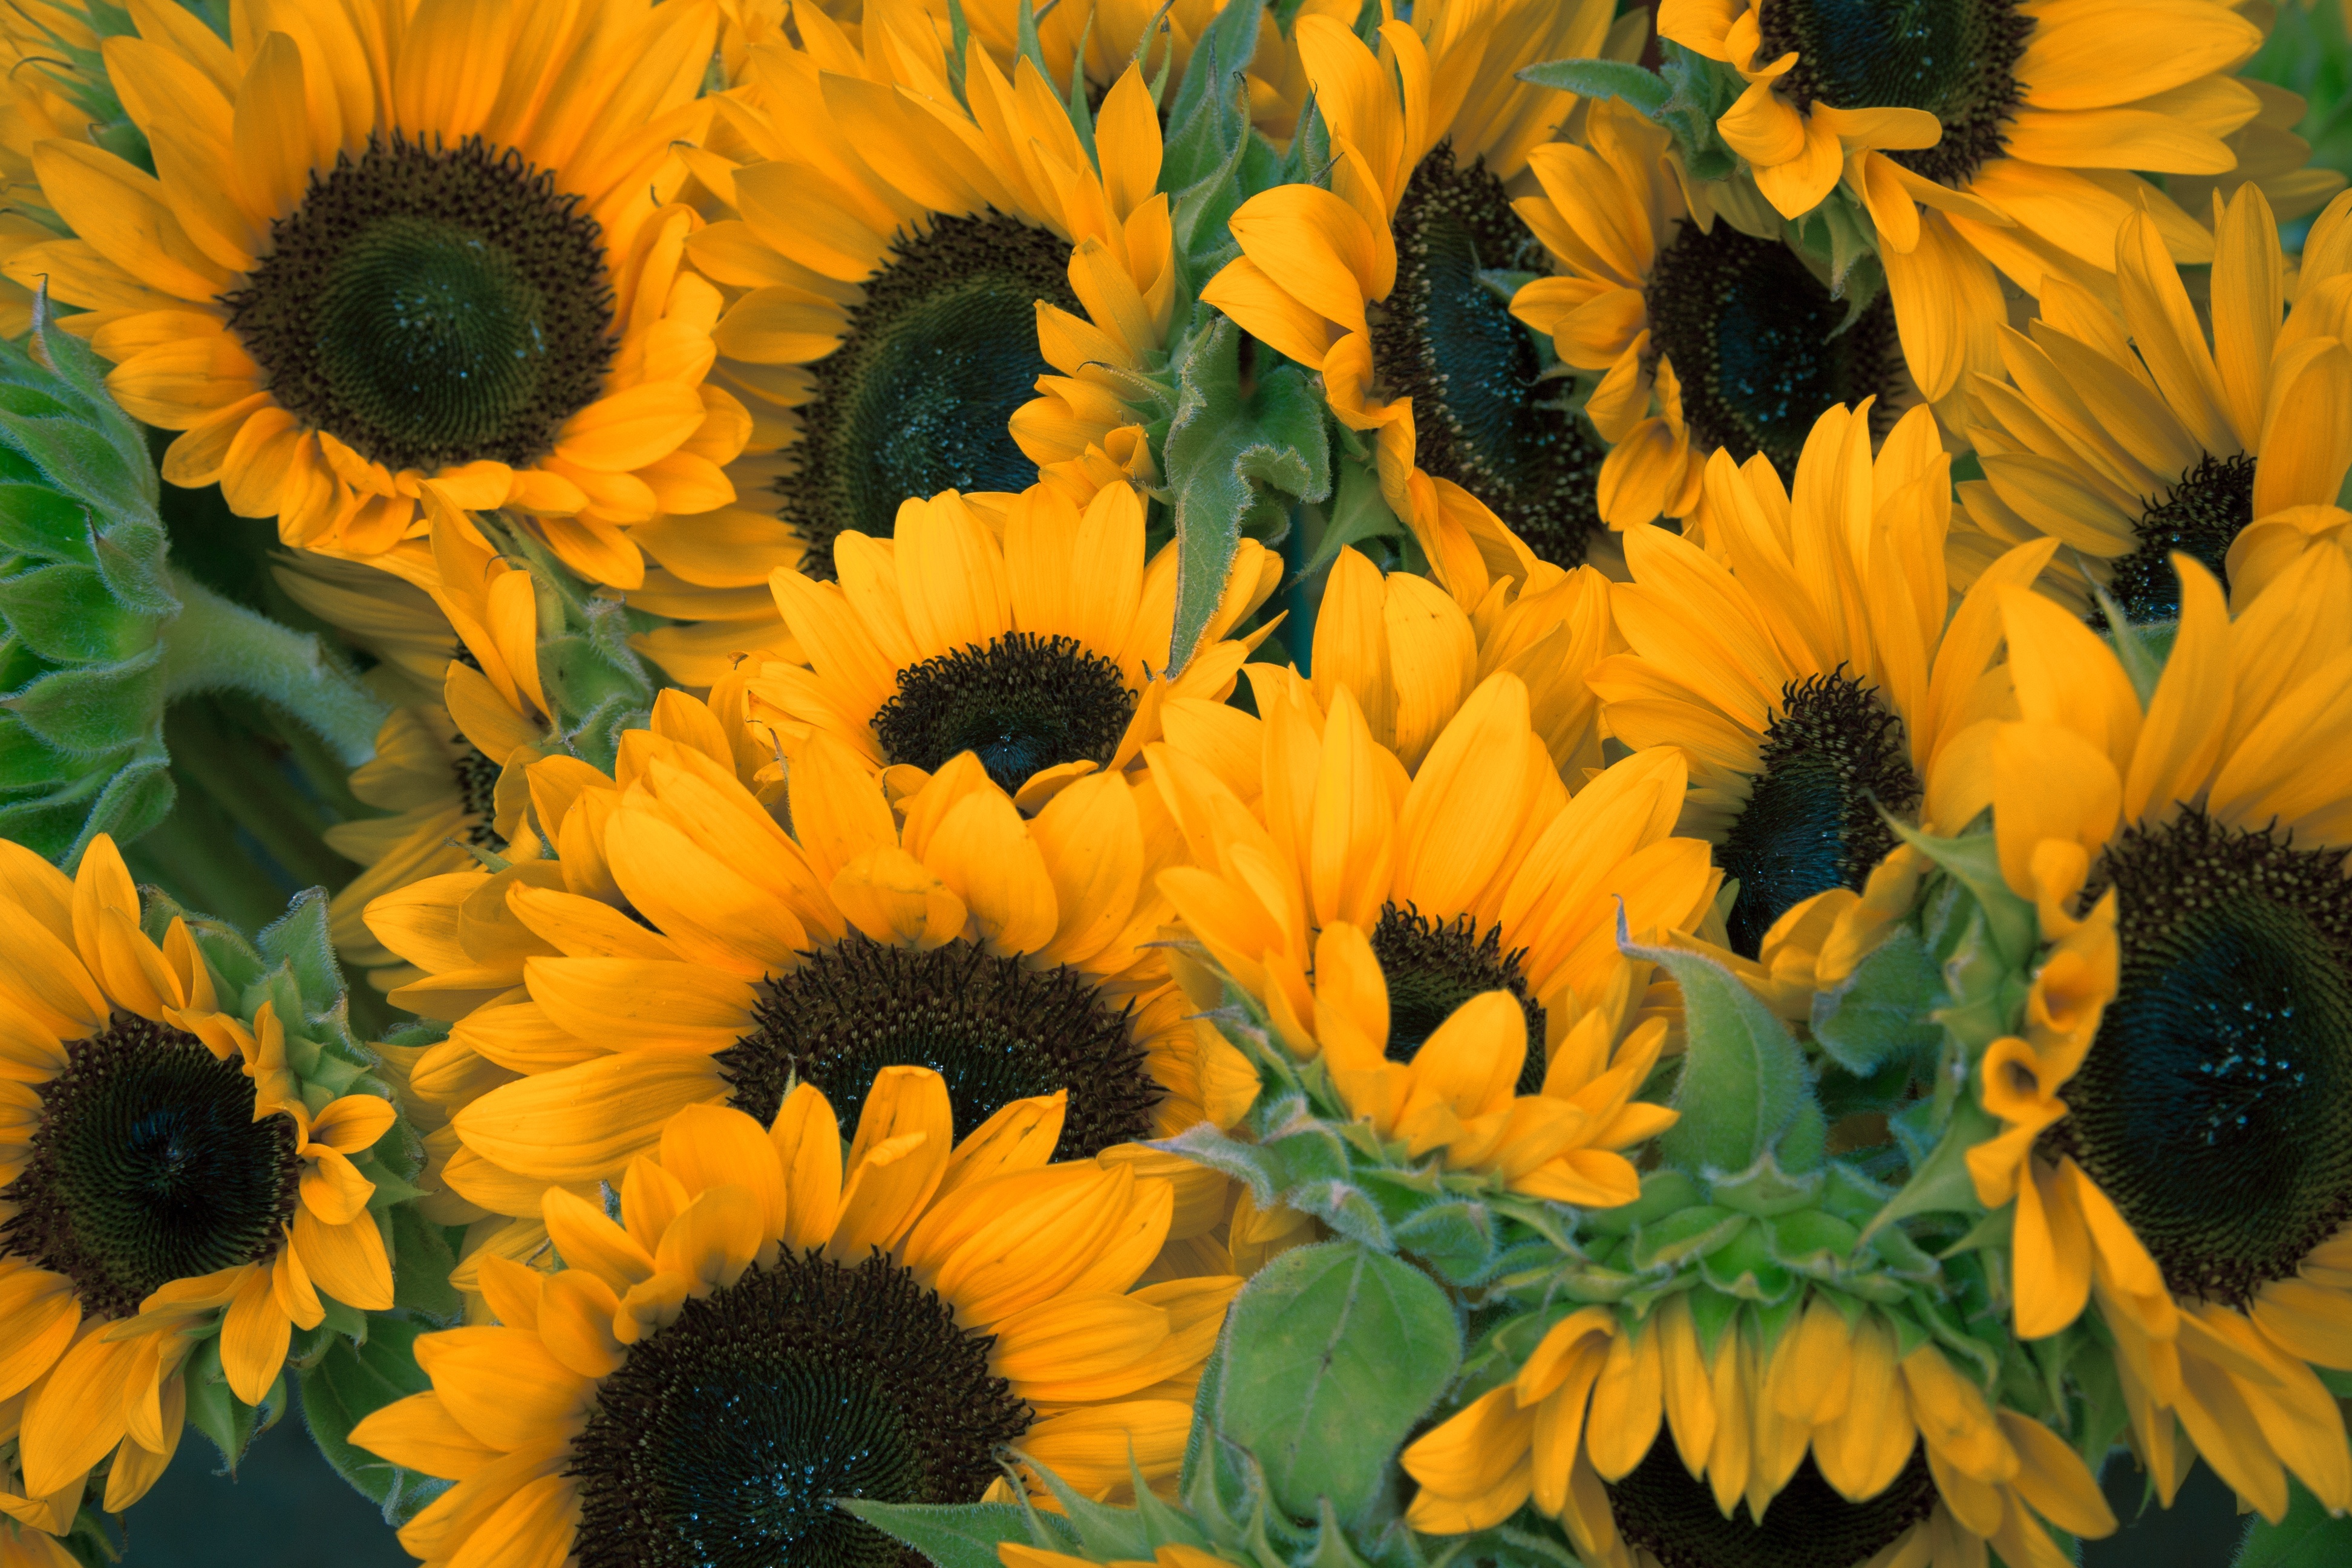 Unripe sunflowers